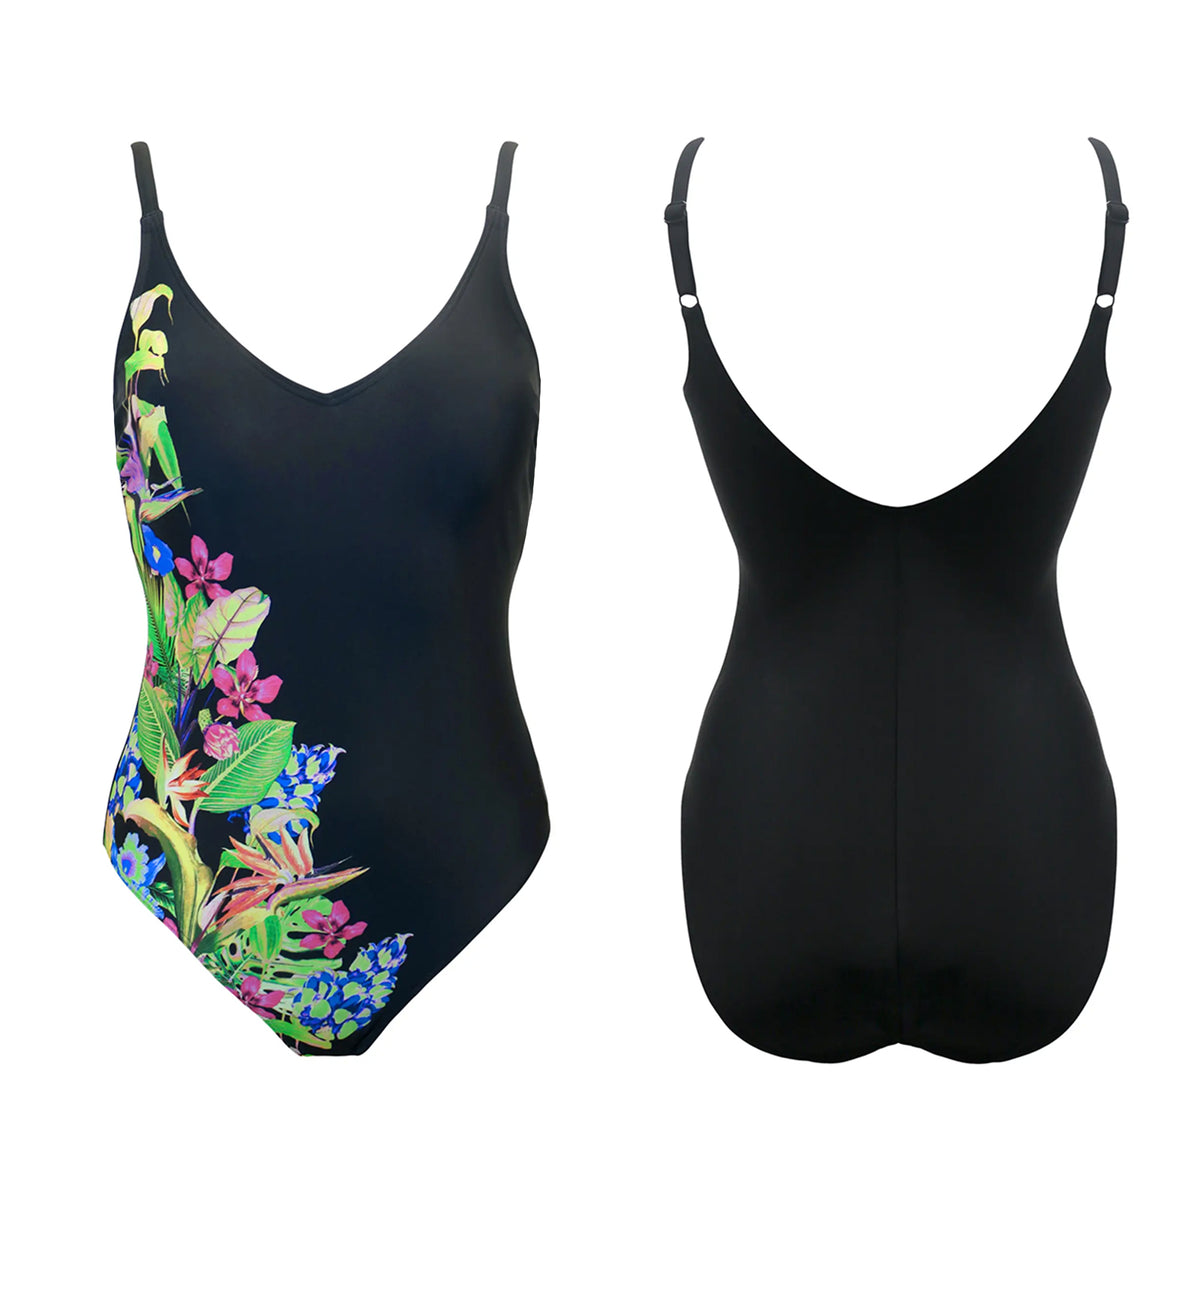 Pour Moi St Lucia Scoop Neck Control Swimsuit (29506),Medium,Tropical - Tropical,Medium